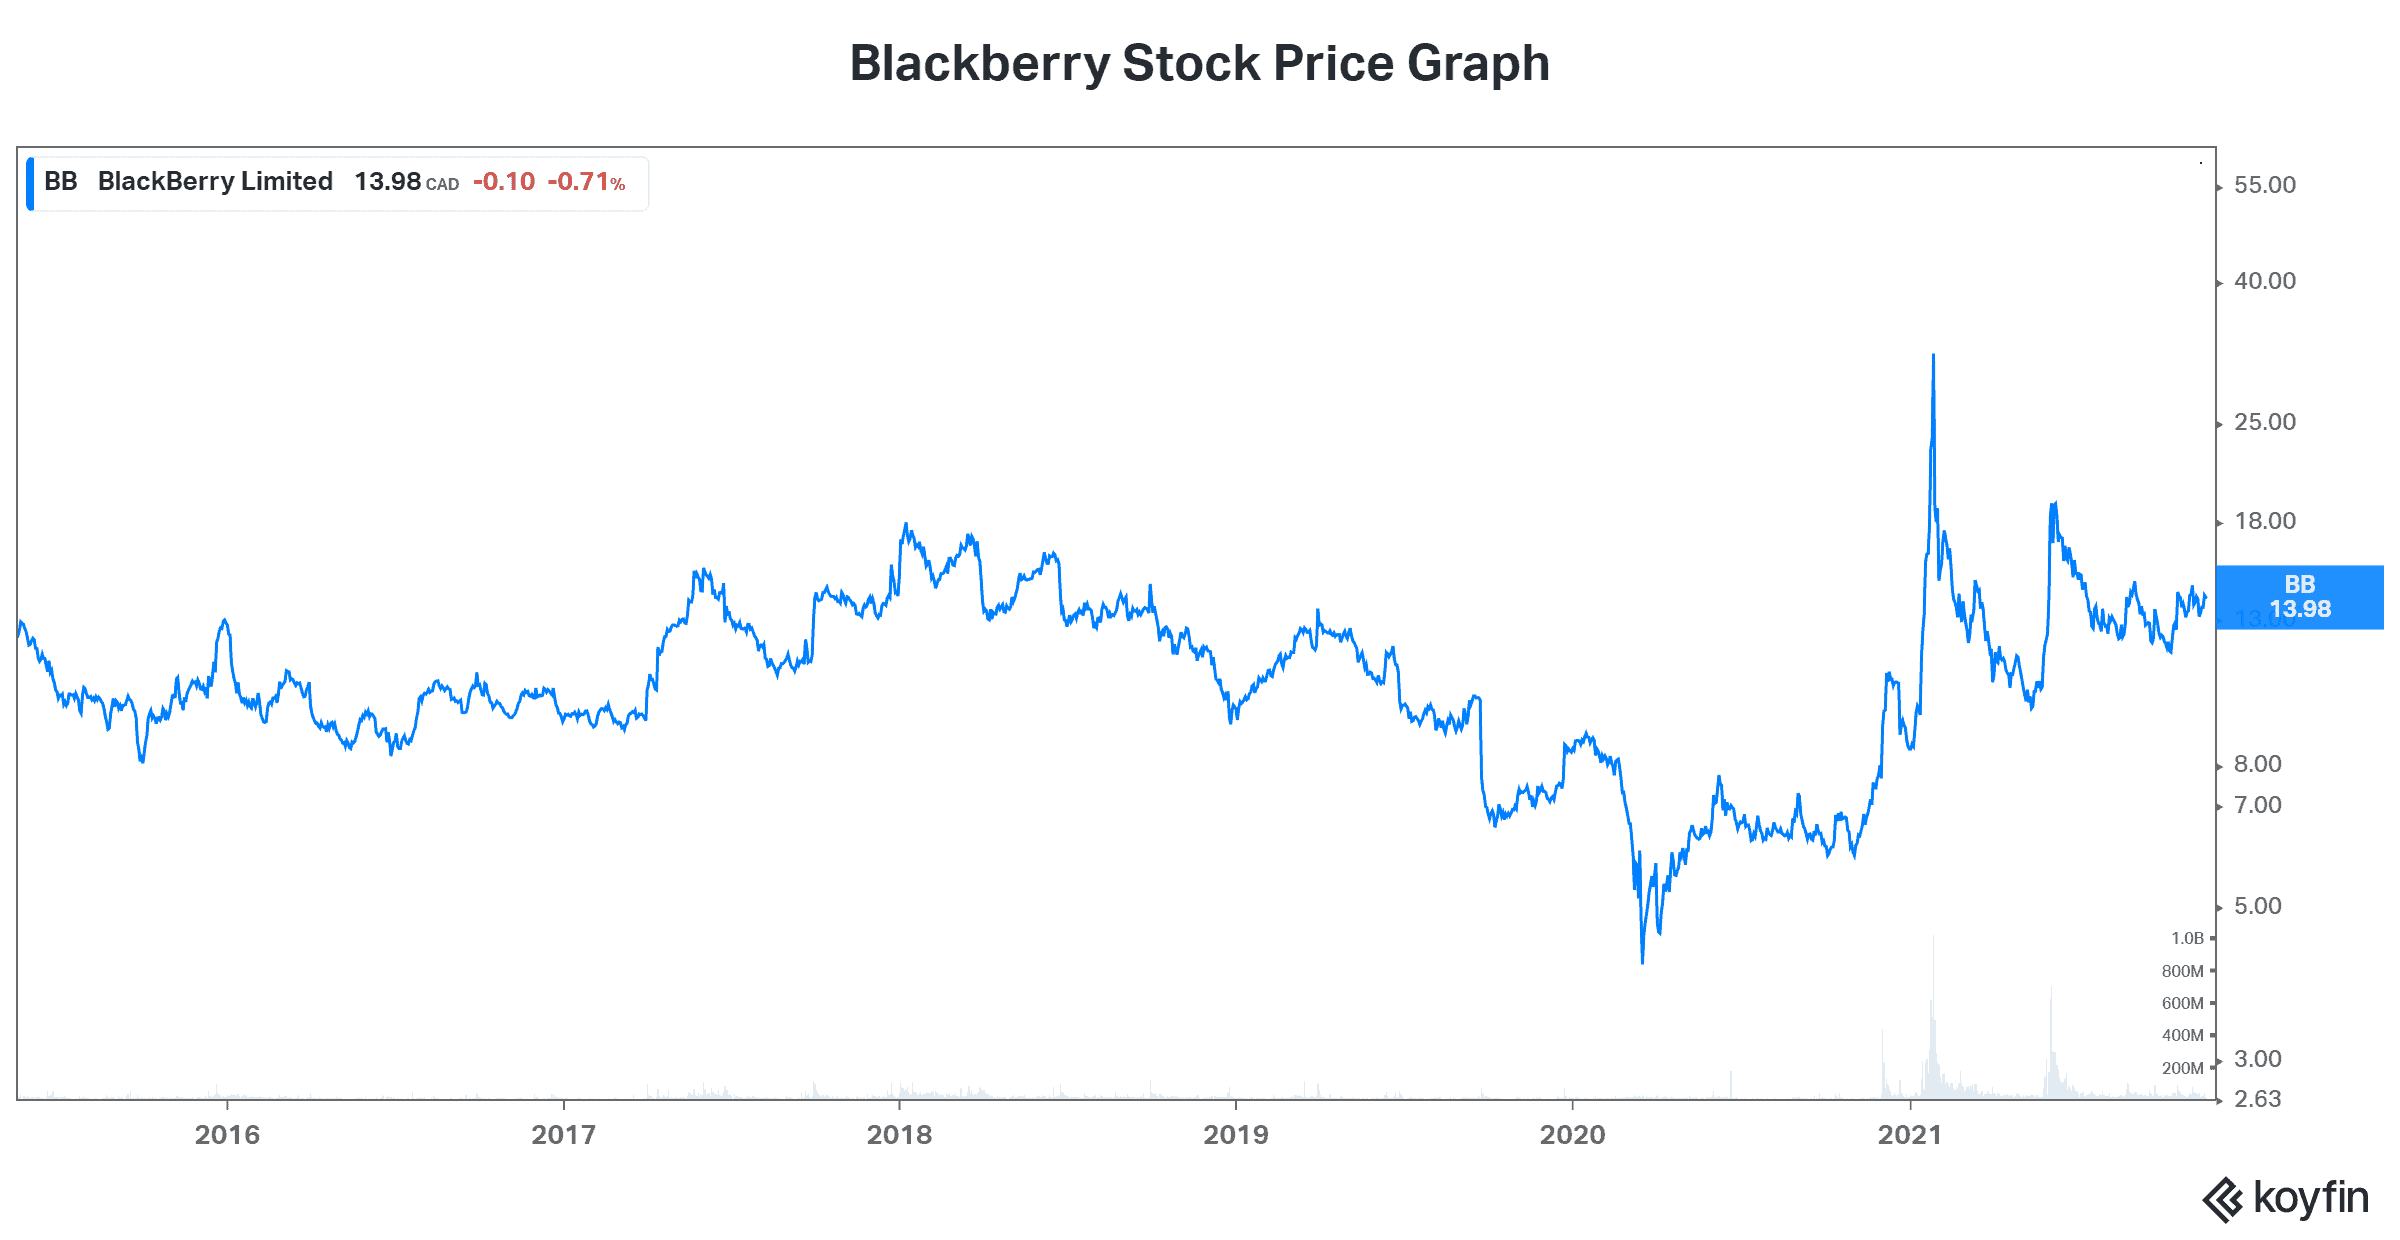 Growth stock Blackberry stock